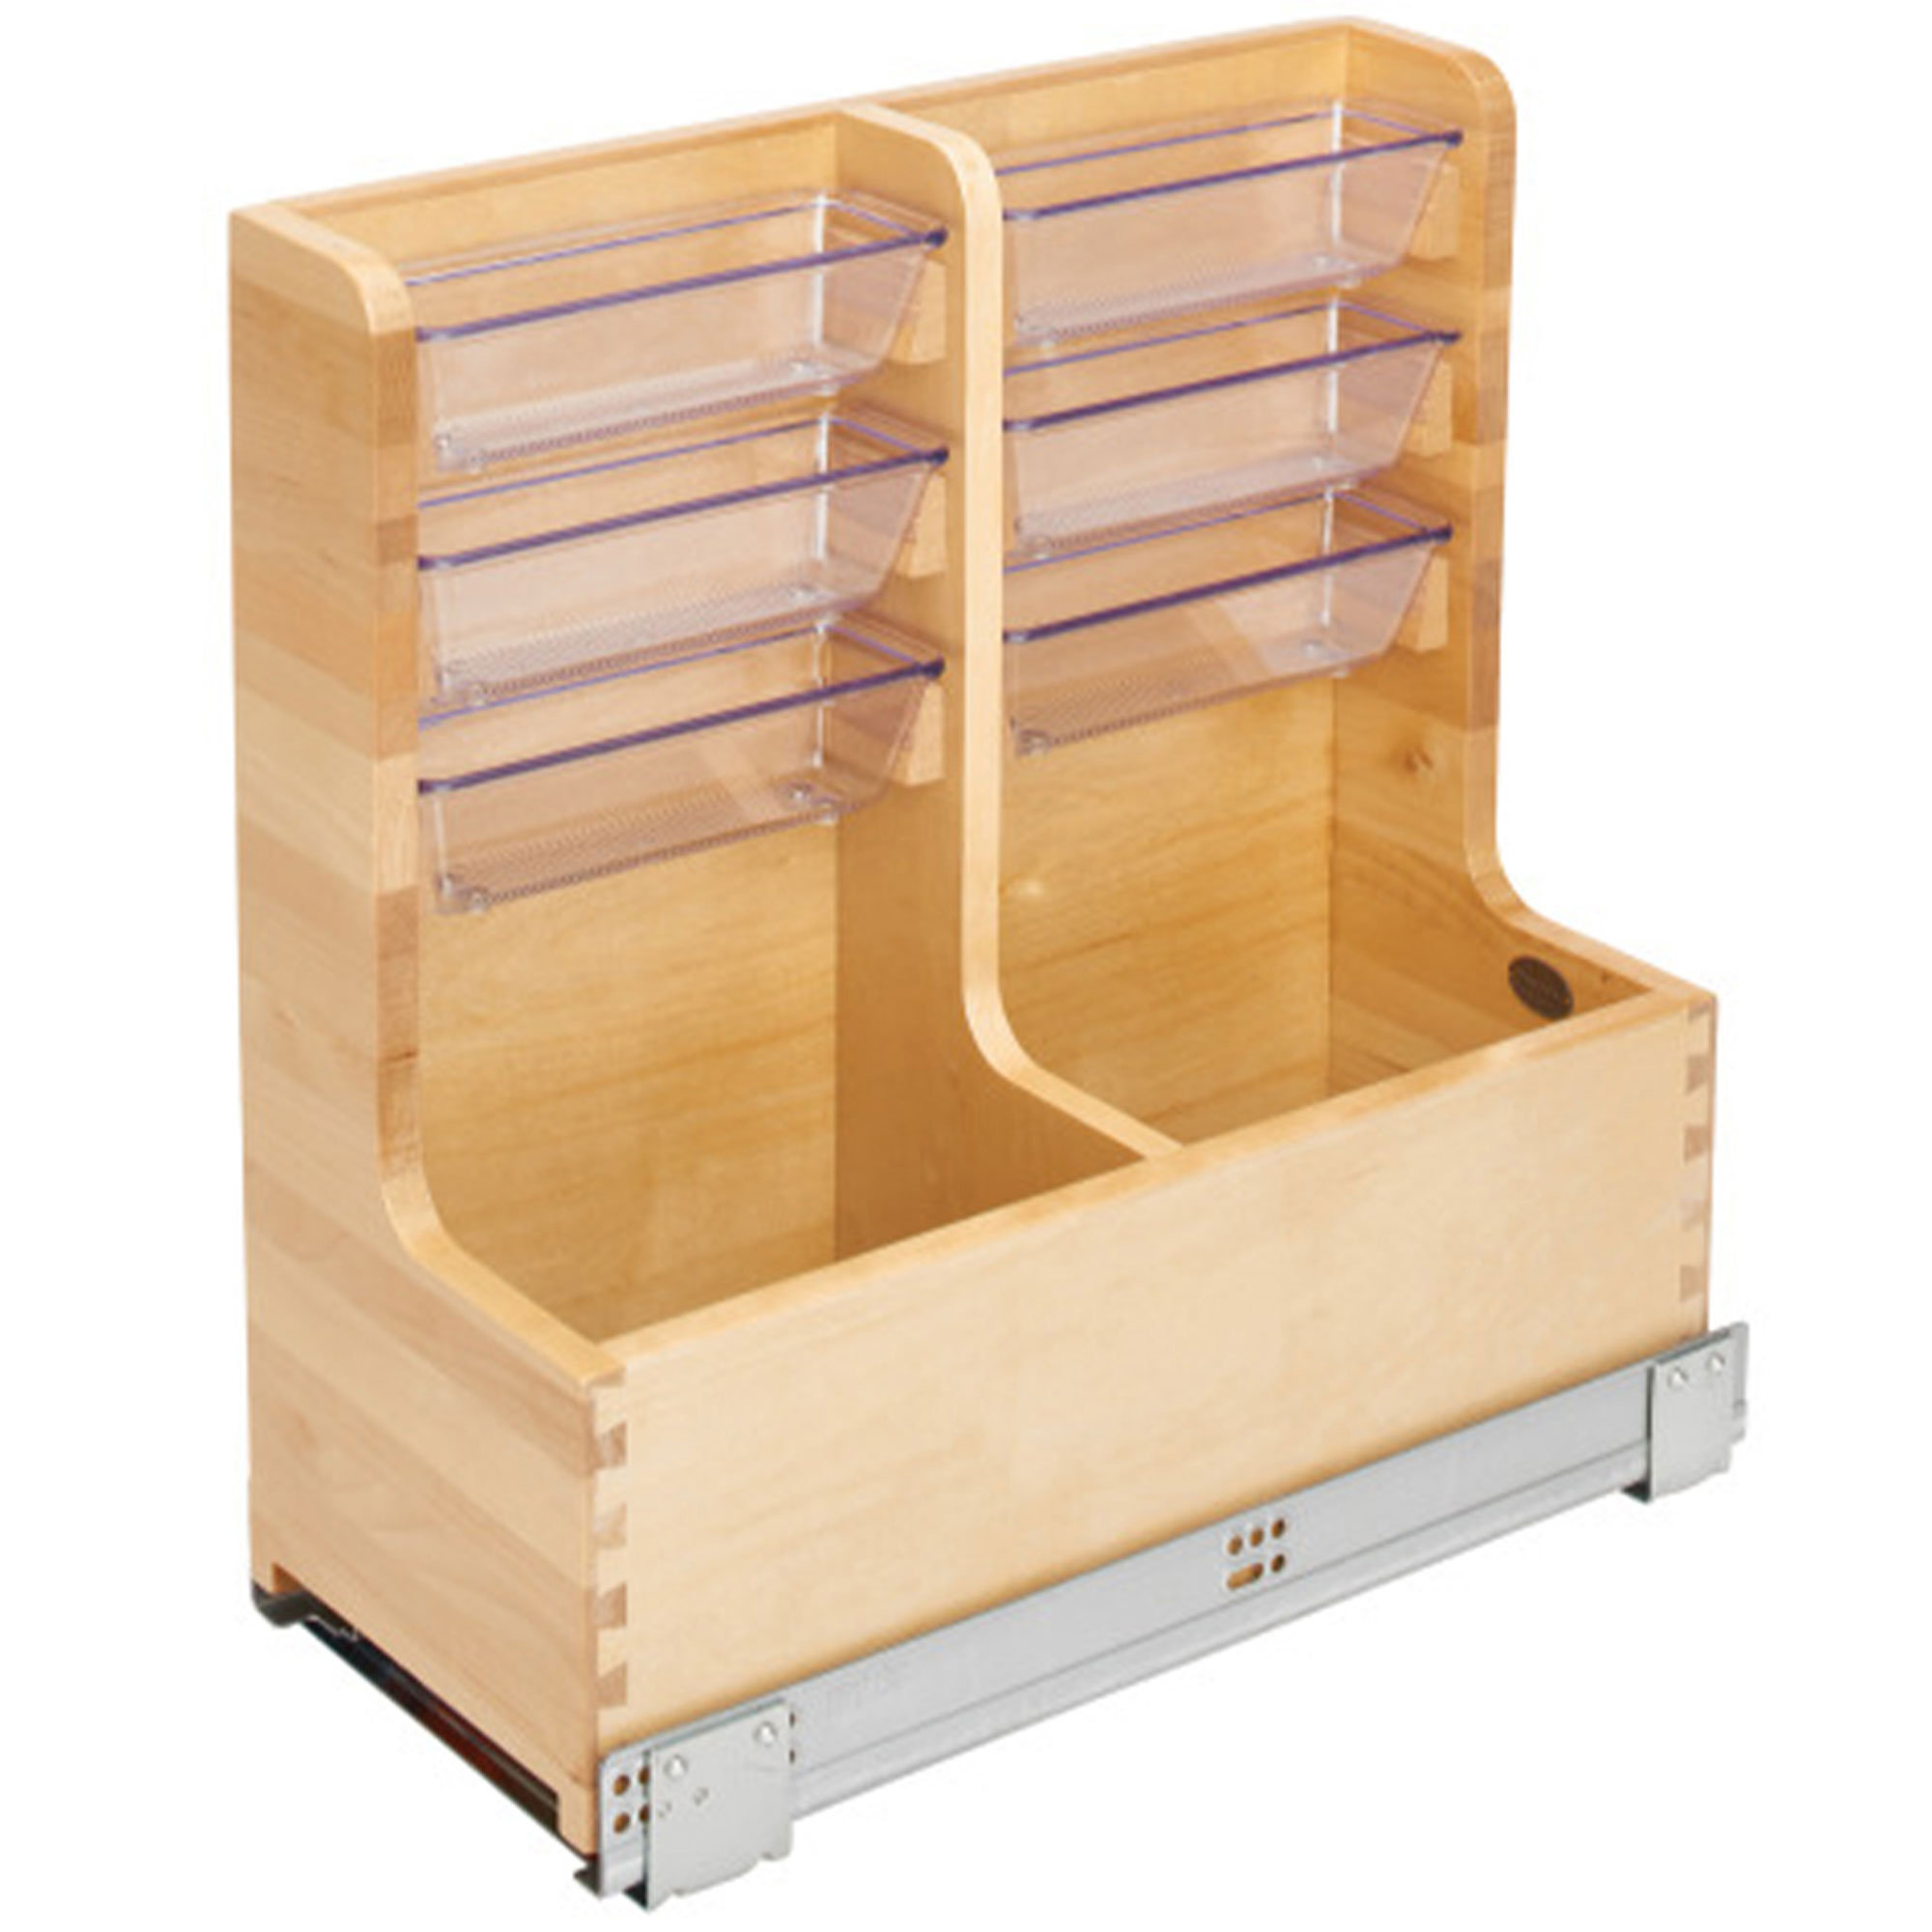 Sink Base Multi-Storage Shelf Kit